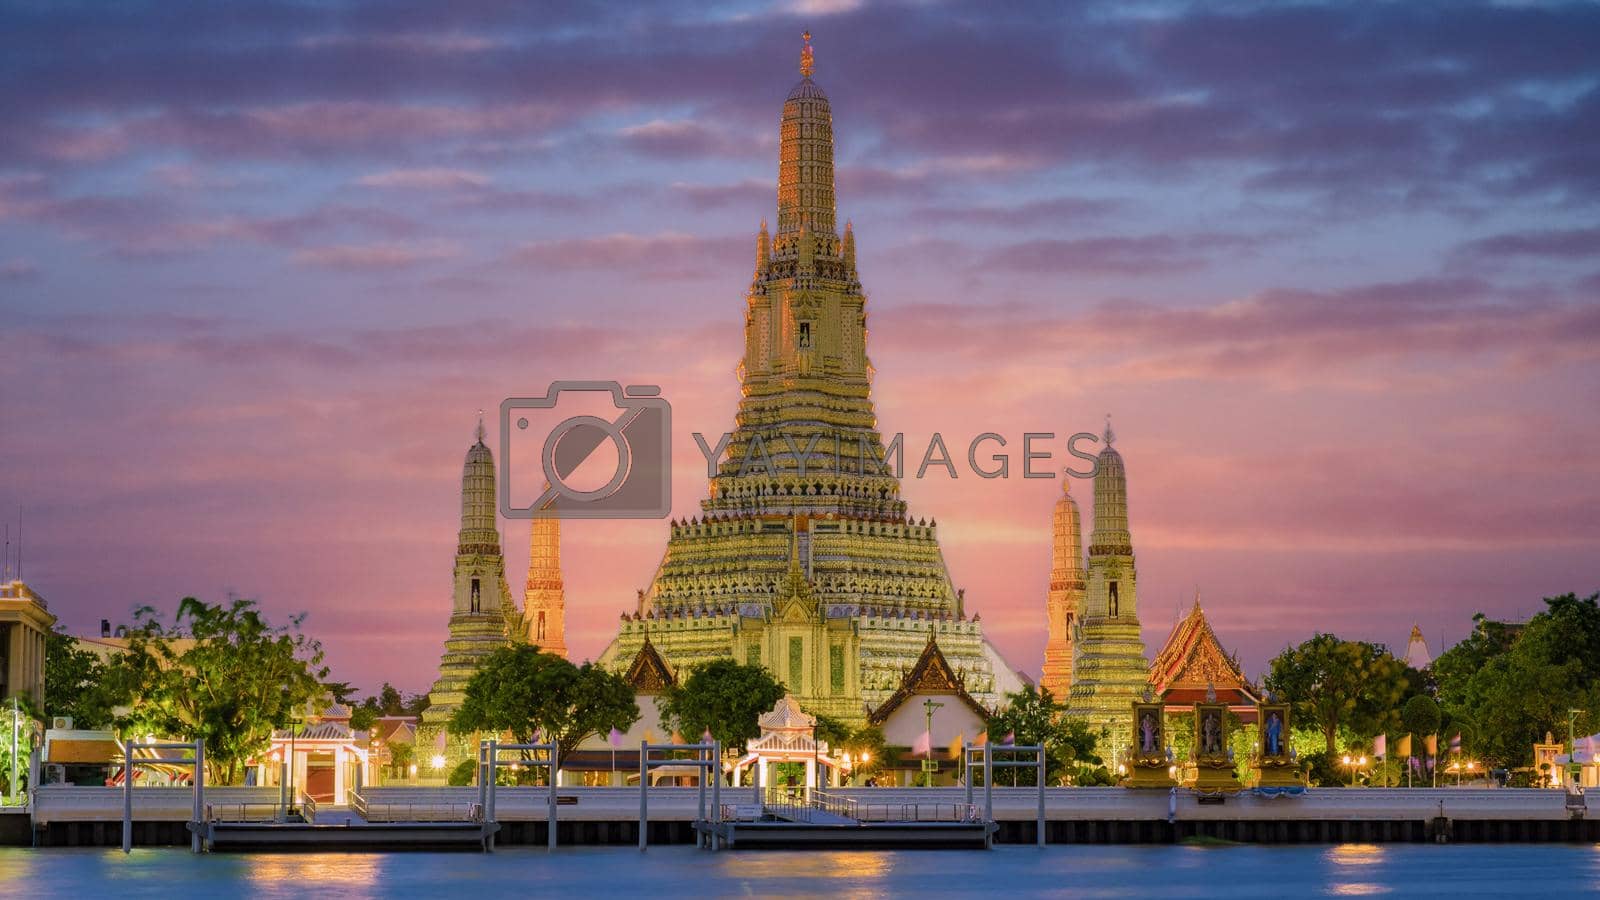 Royalty free image of Wat Arun temple Bangkok Thailand, Temple of Dawn, Buddhist temple alongside Chao Phraya River by fokkebok